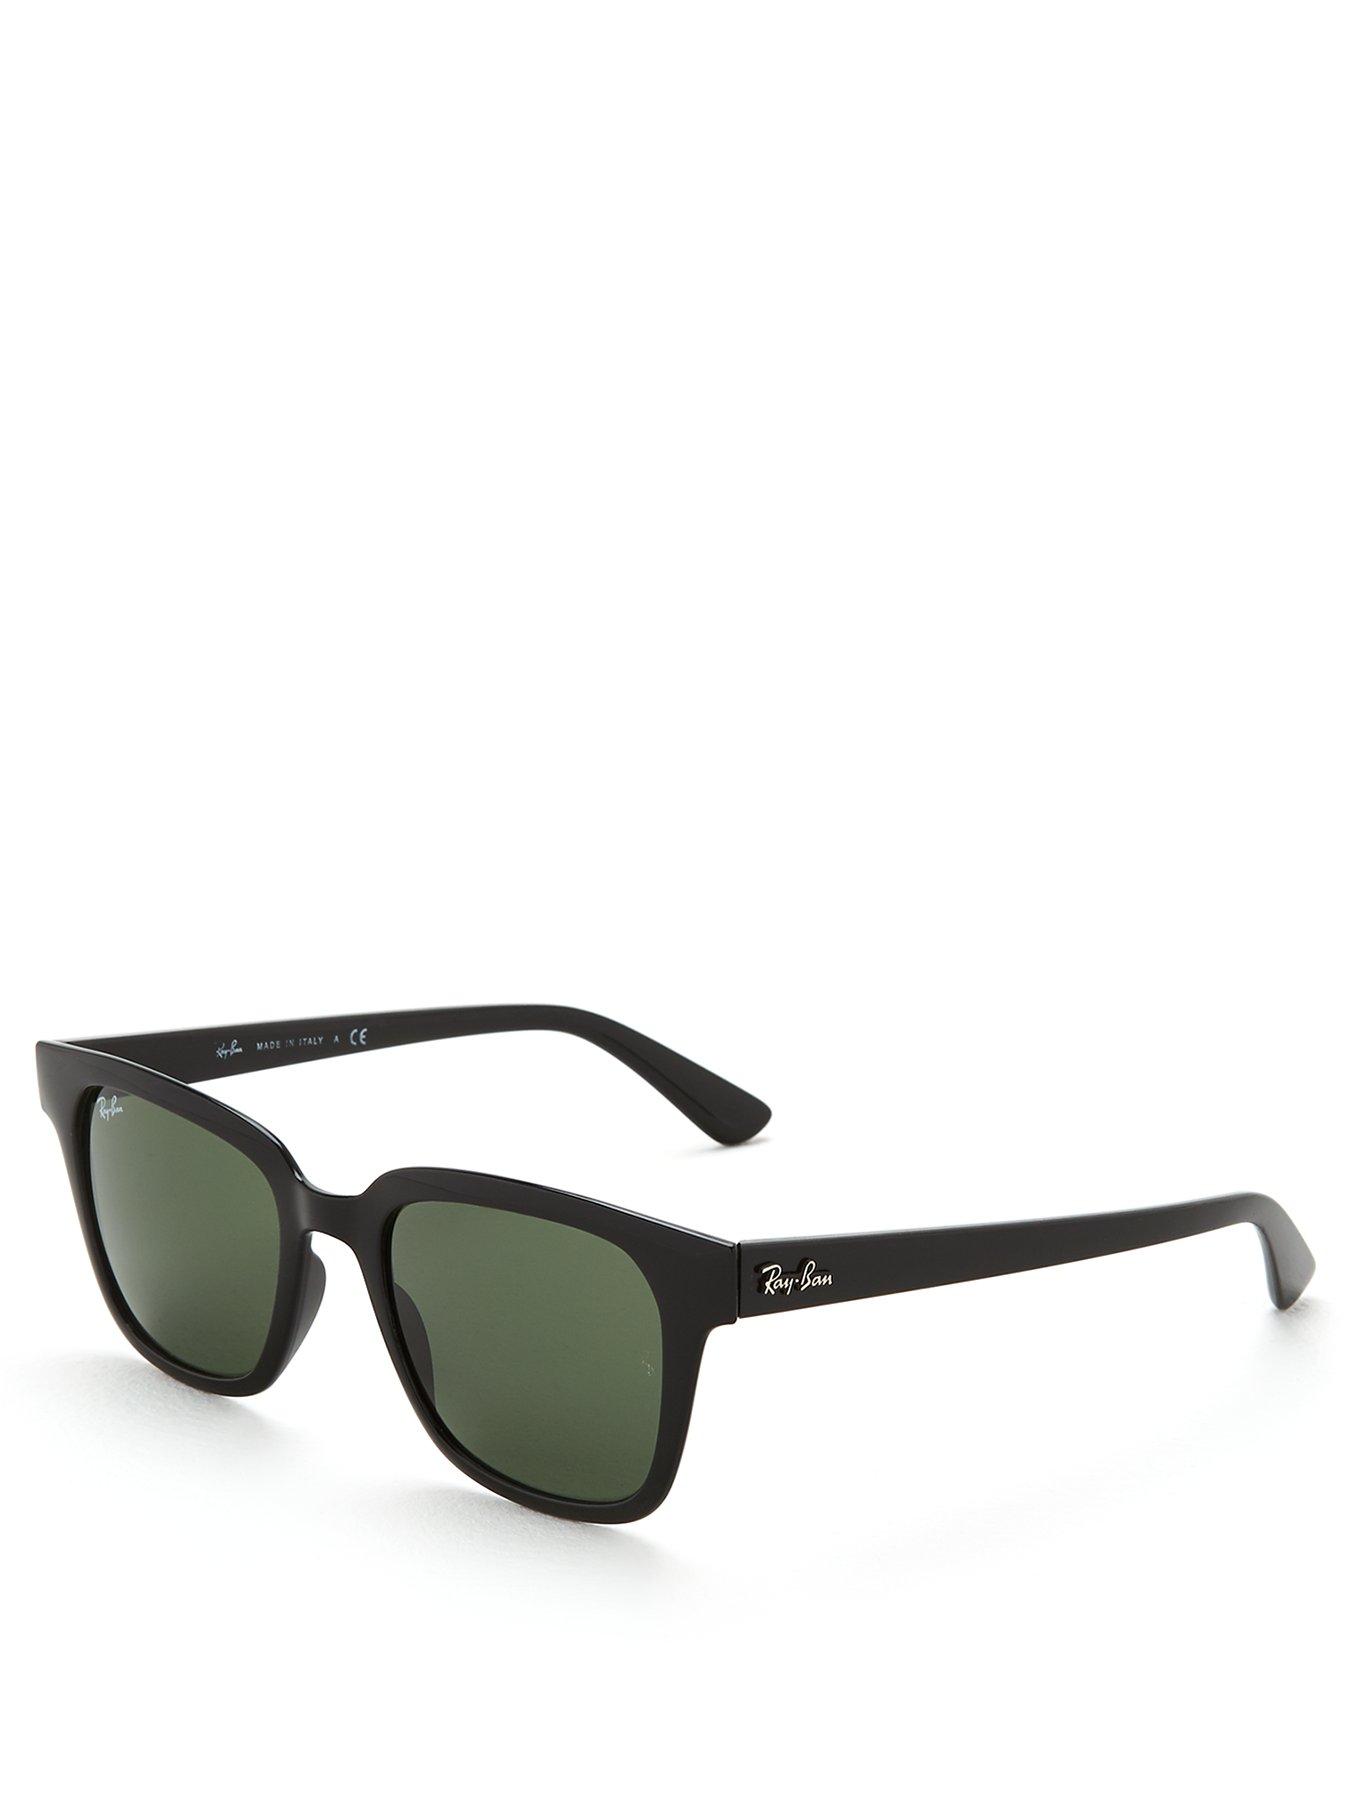 Ray-Ban Square Sunglasses - Black 